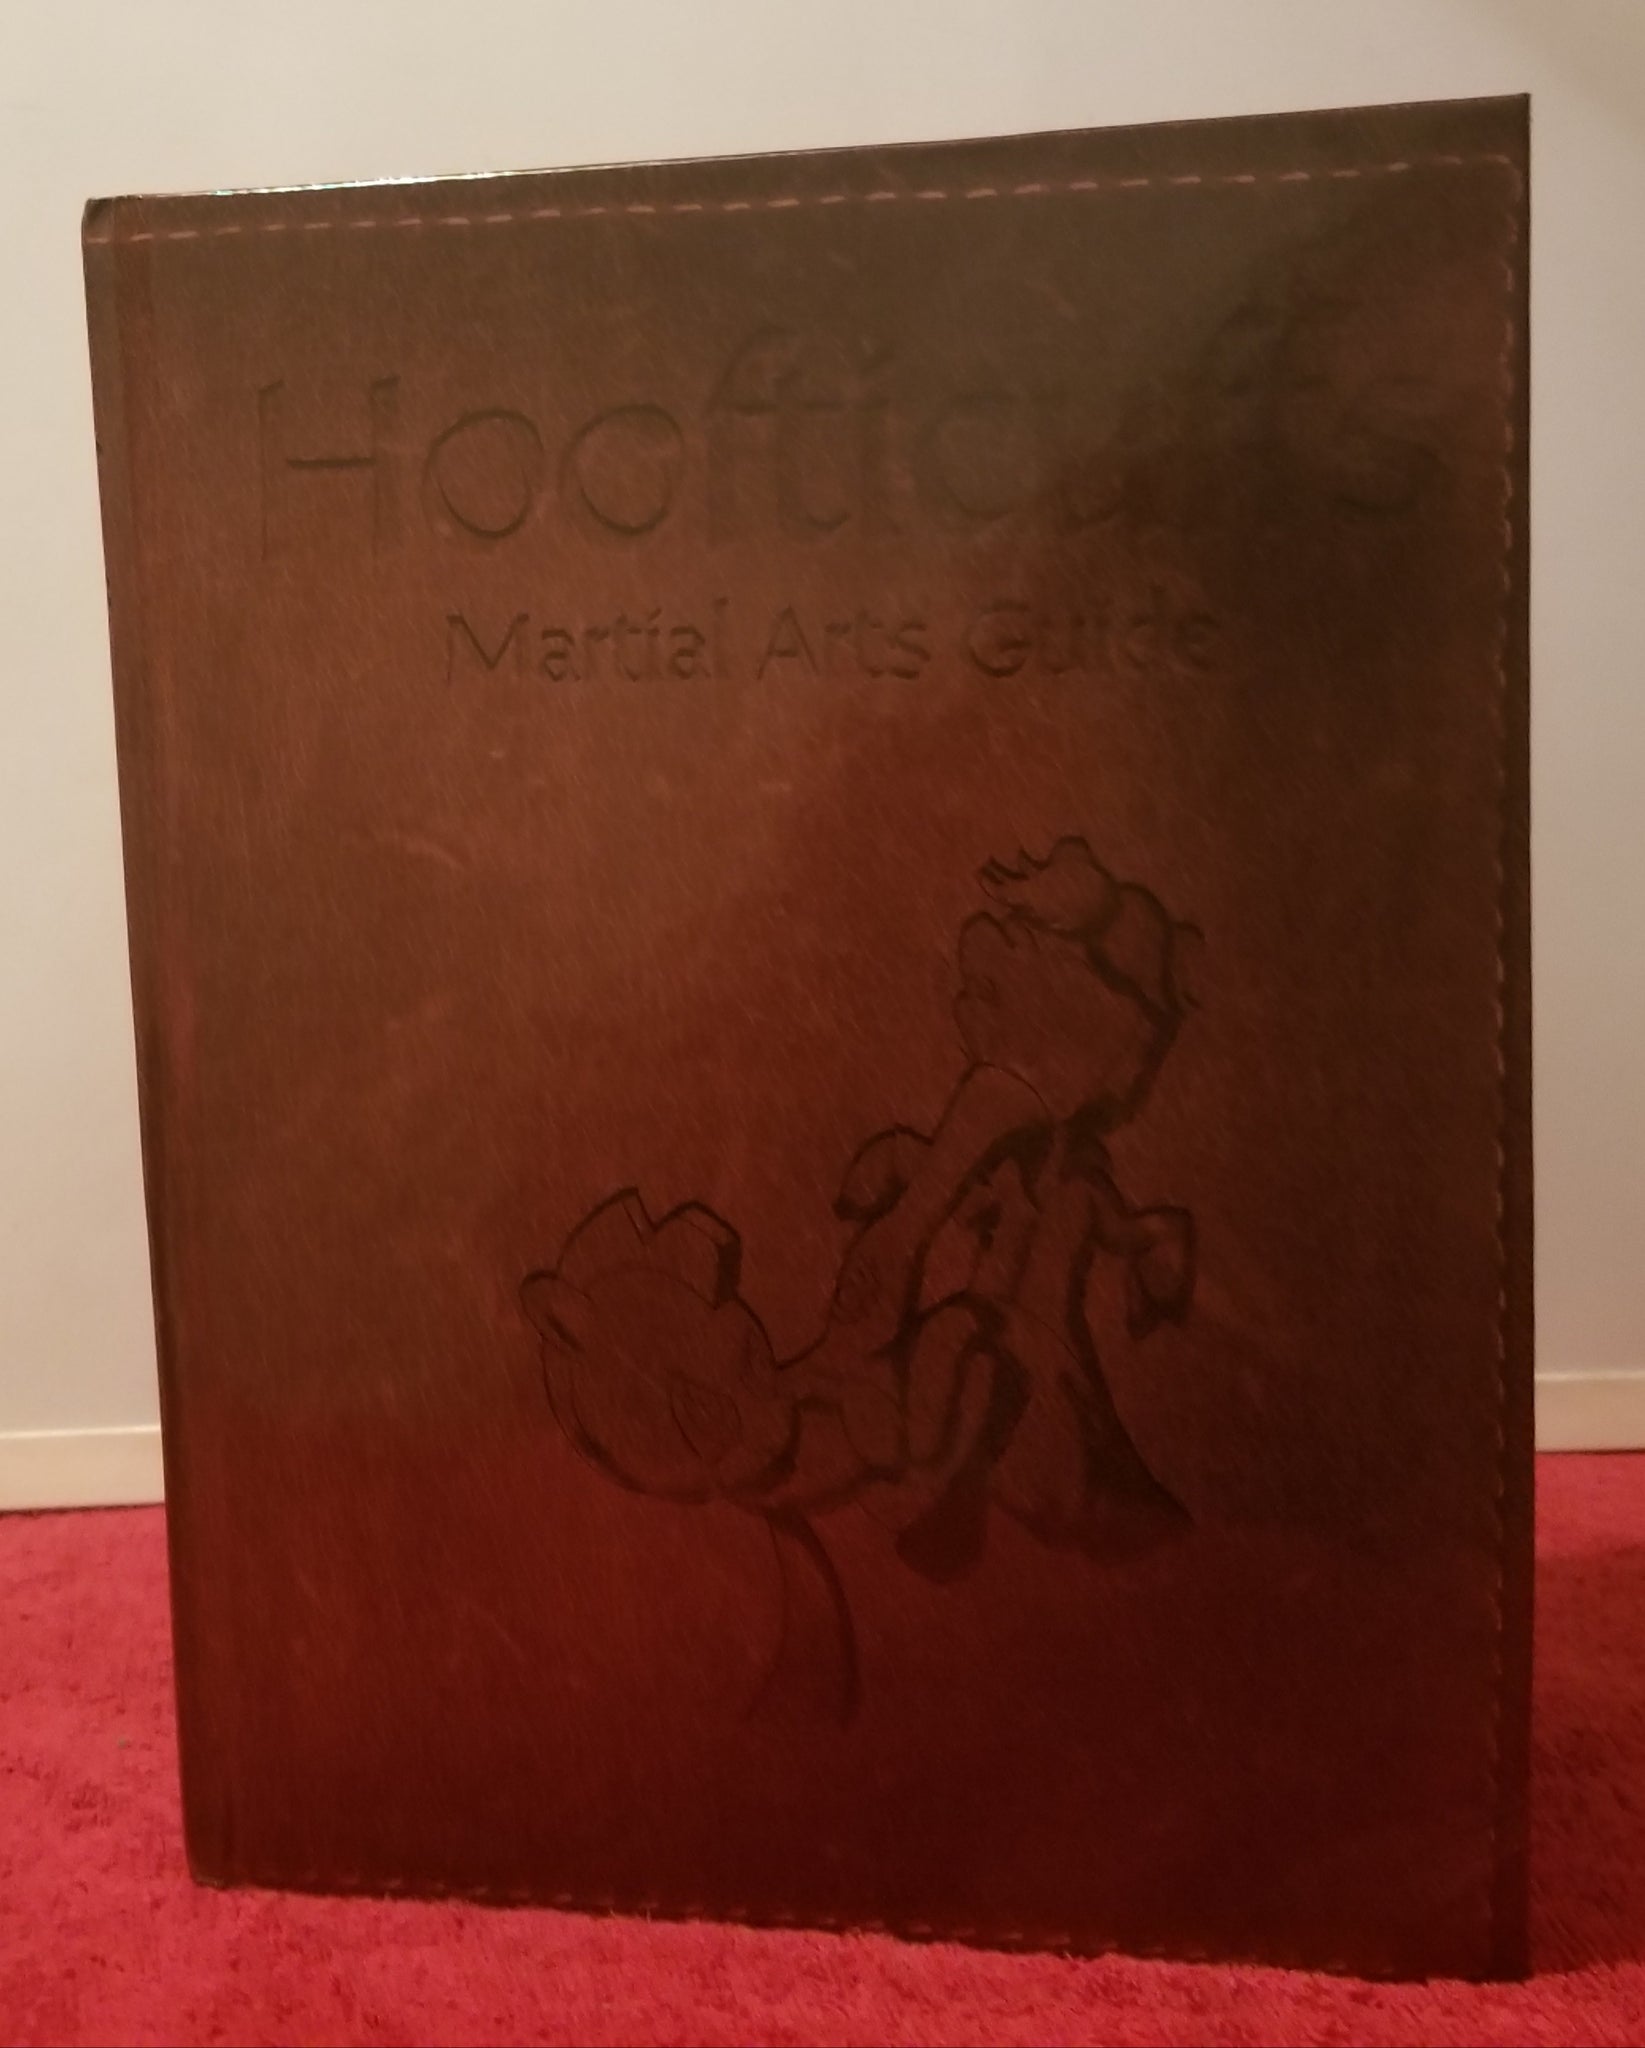 Hoofticuffs: A Martial Arts Guide